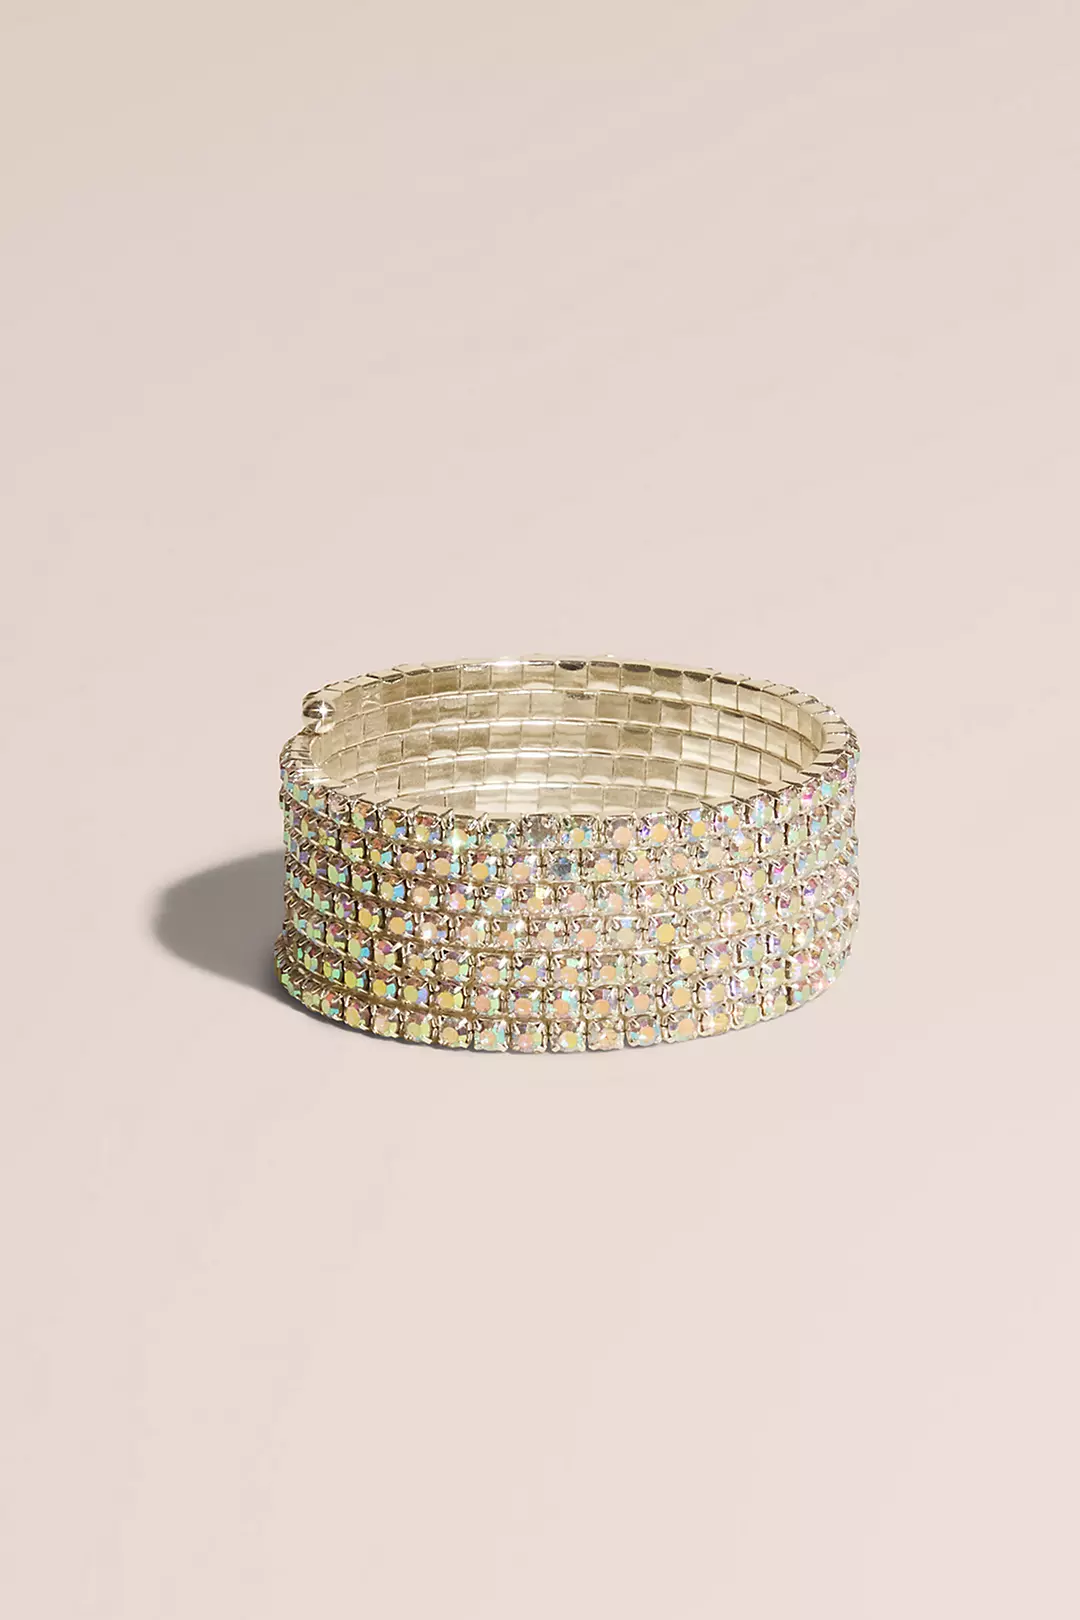 Iridescent Rhinestone Coil Wrap Bracelet Image